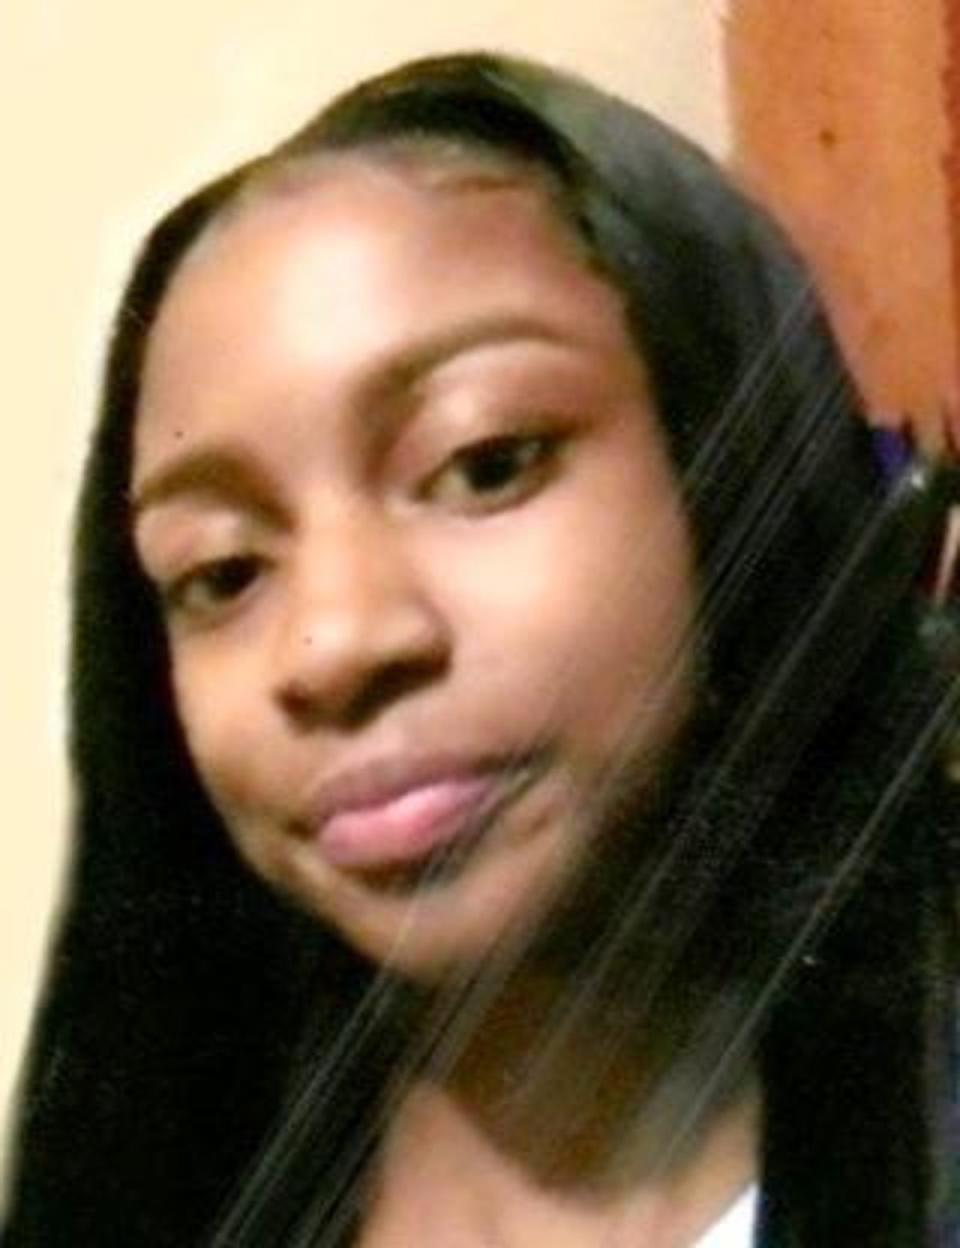 Terriana Johnson, 19, was shot dead in Watkins Park, Nashville, on 14 November (The Black Femicide Protection Coalition)